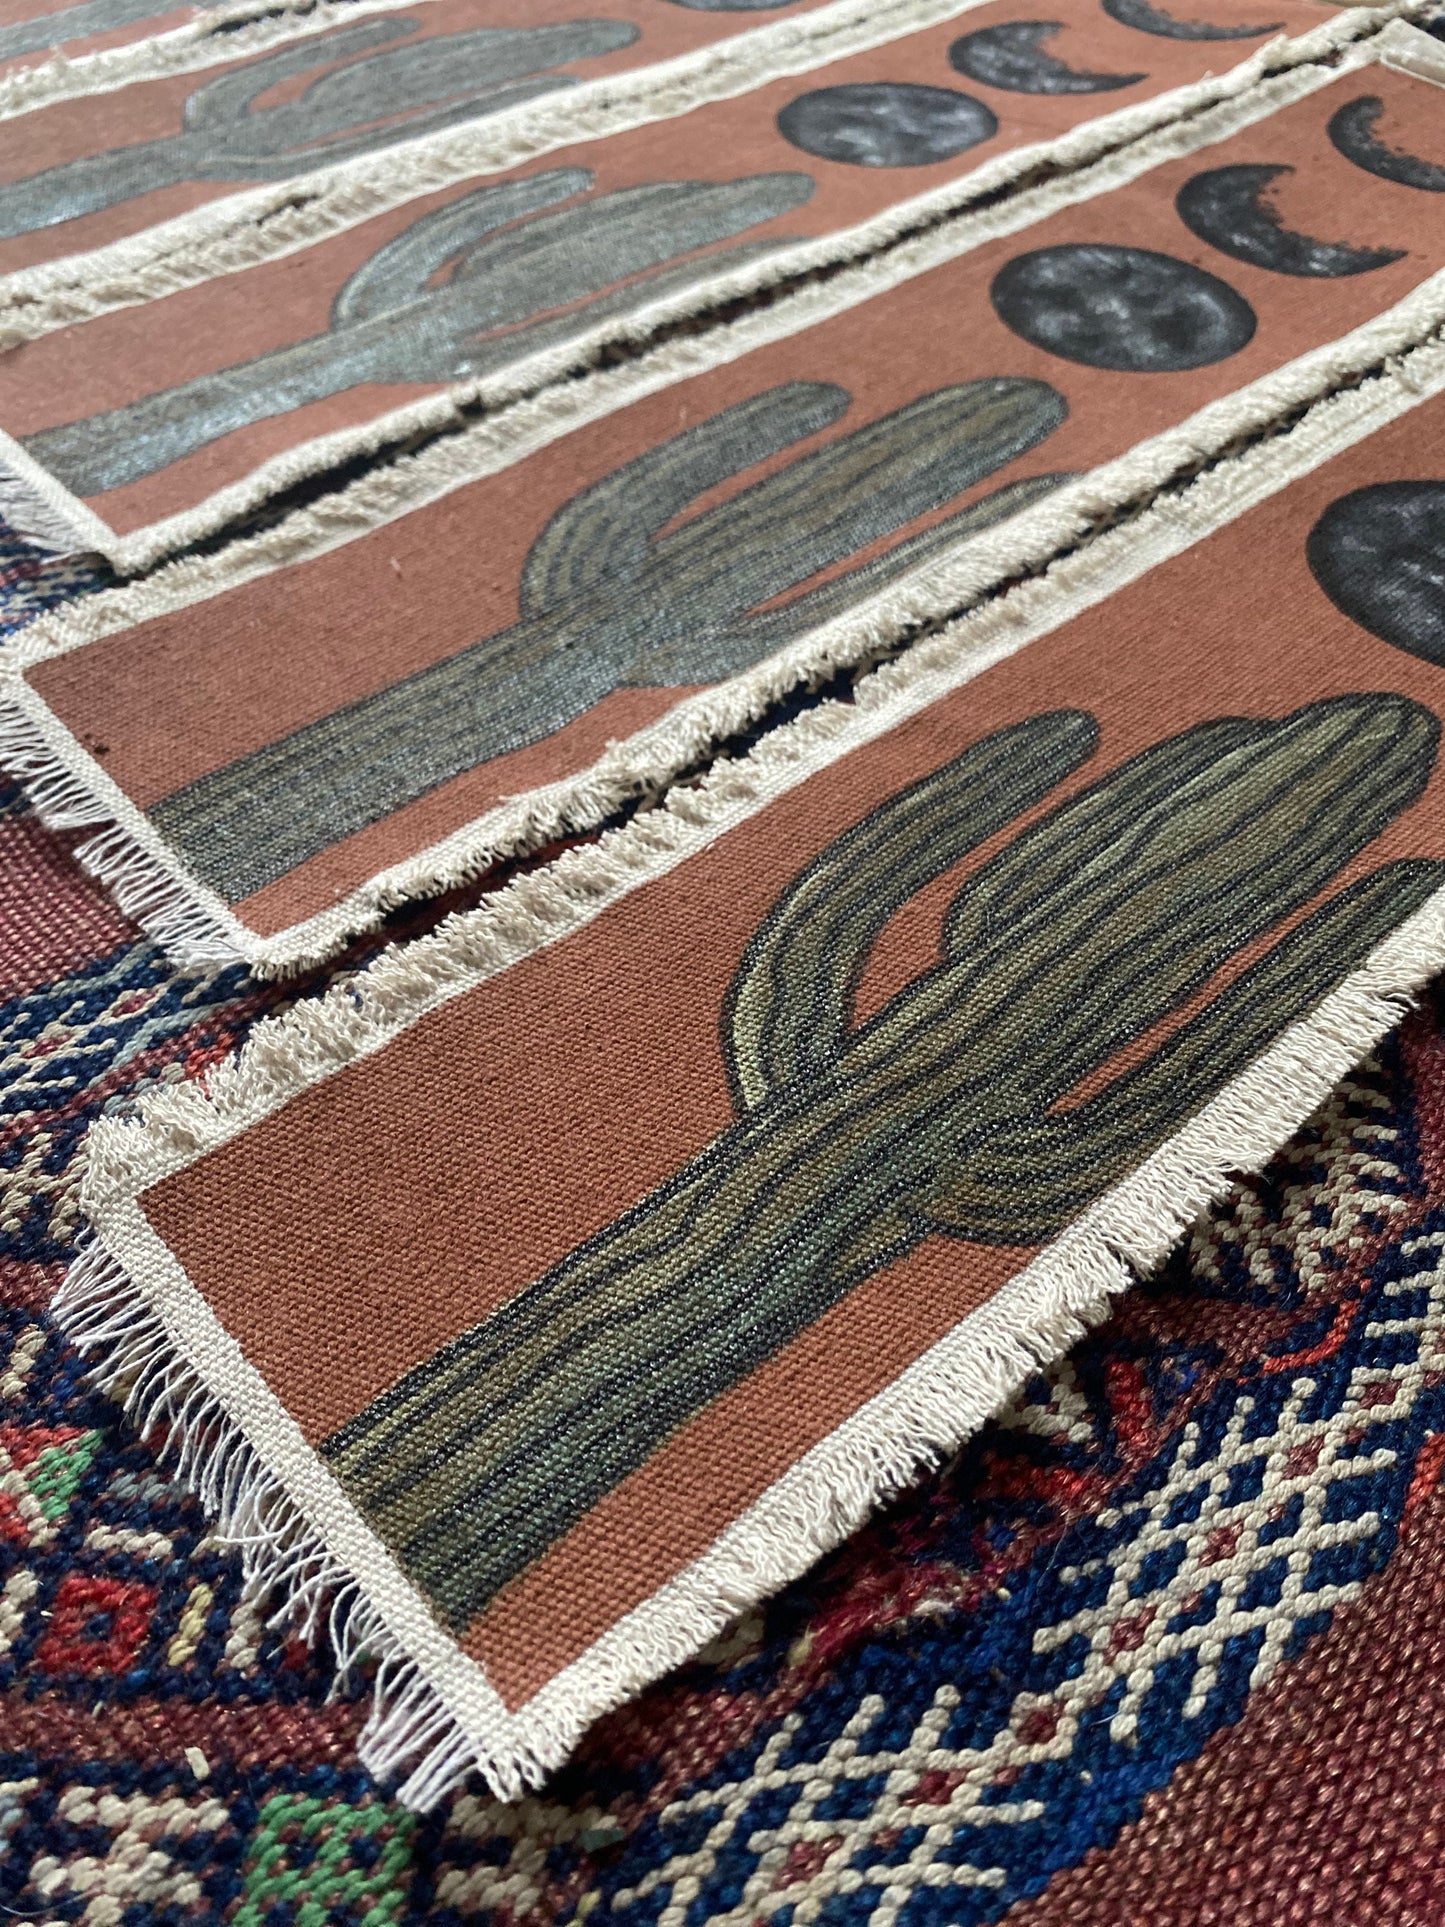 Mini Saguaro Wall Tapestry